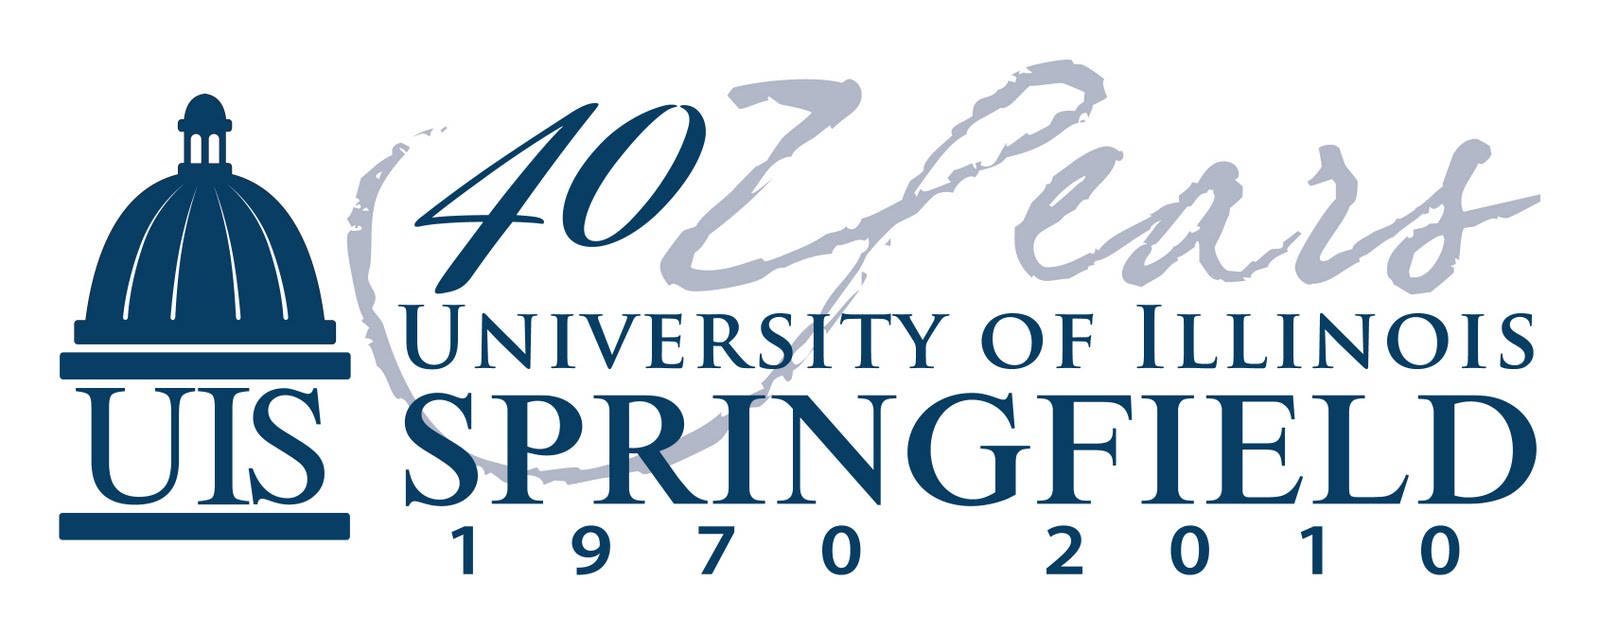 University of Illinois Springfield. UIS логотип. University of Illinois logo. Springfield logo. Travel university